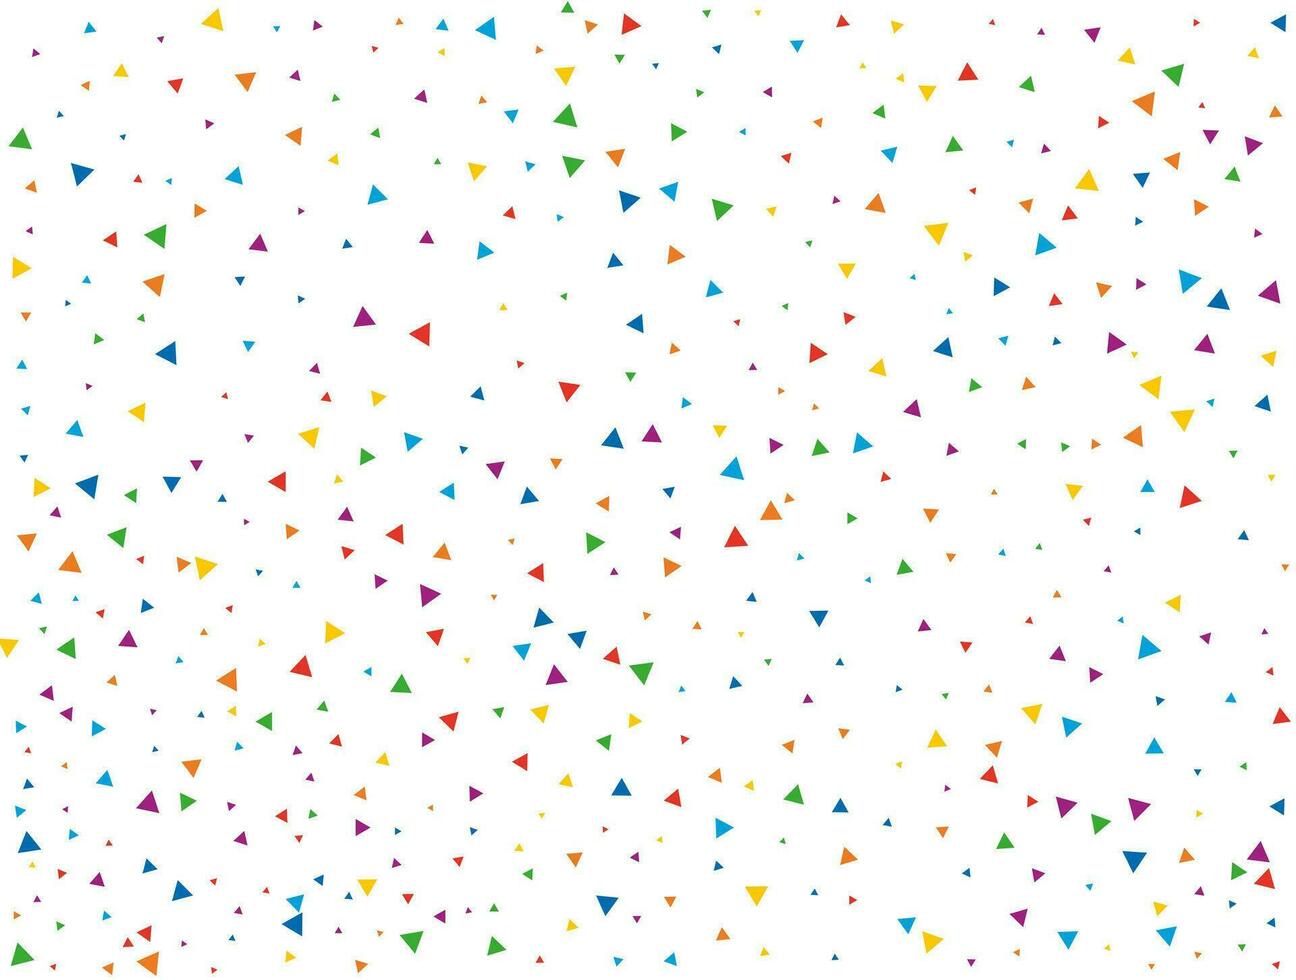 Triangular Rainbow  Confetti. Rainbow glitter confetti background. Vector illustration.